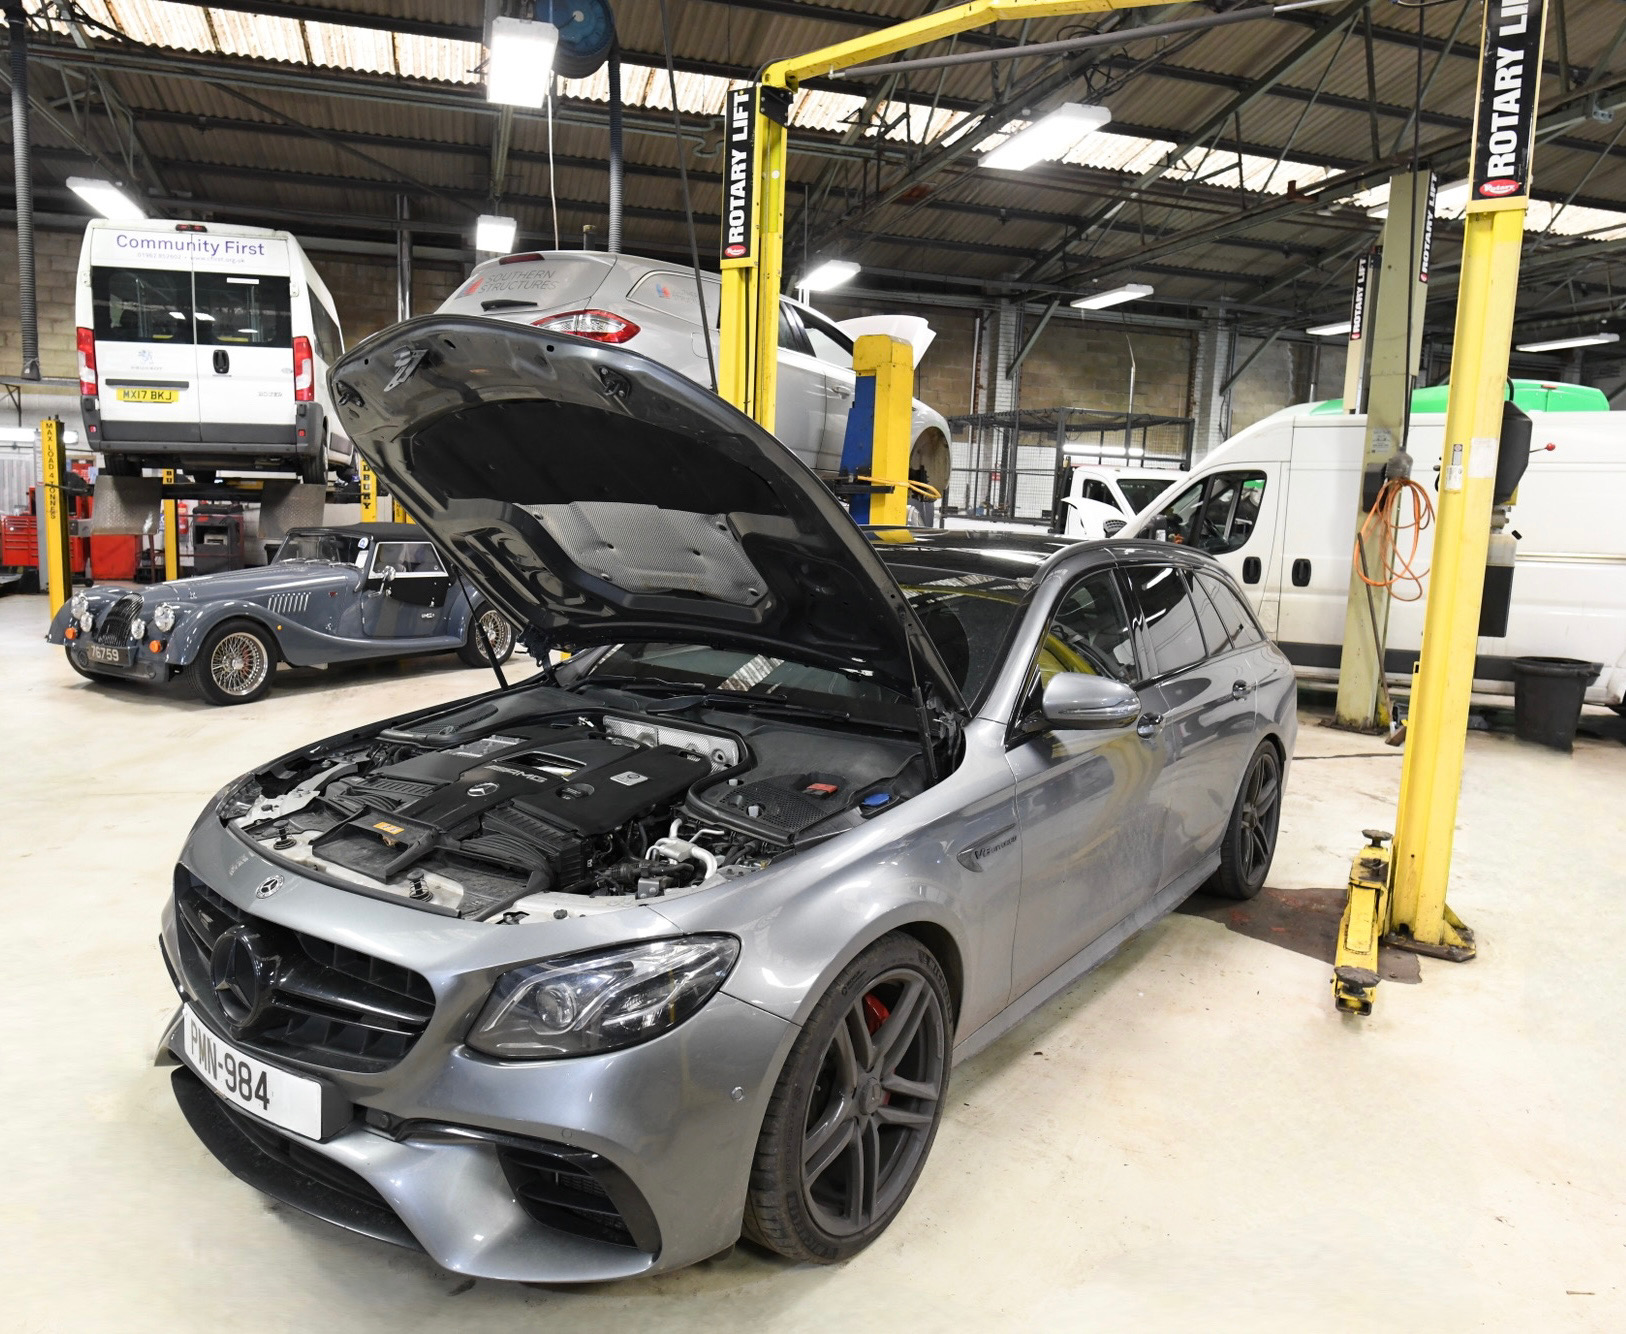 grey Mercedes in the workshop